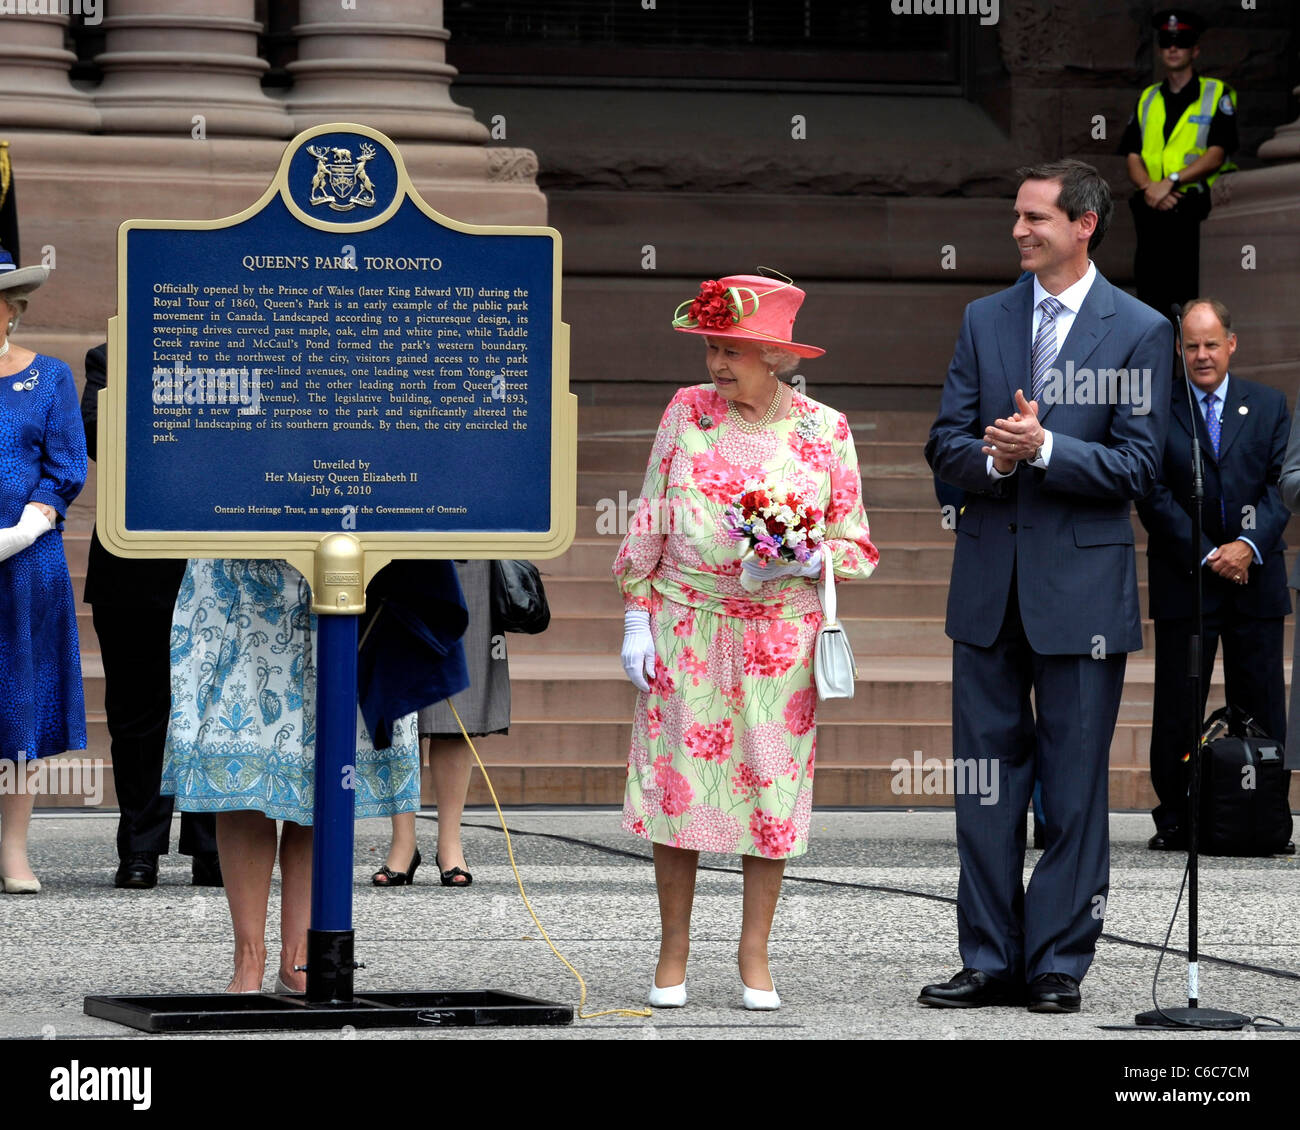 Queen Elizabeth II and Ontario Premier Dalton McGuinty Queen Elizabeth II unveiling a commemorative plaque marking 150 years of Stock Photo